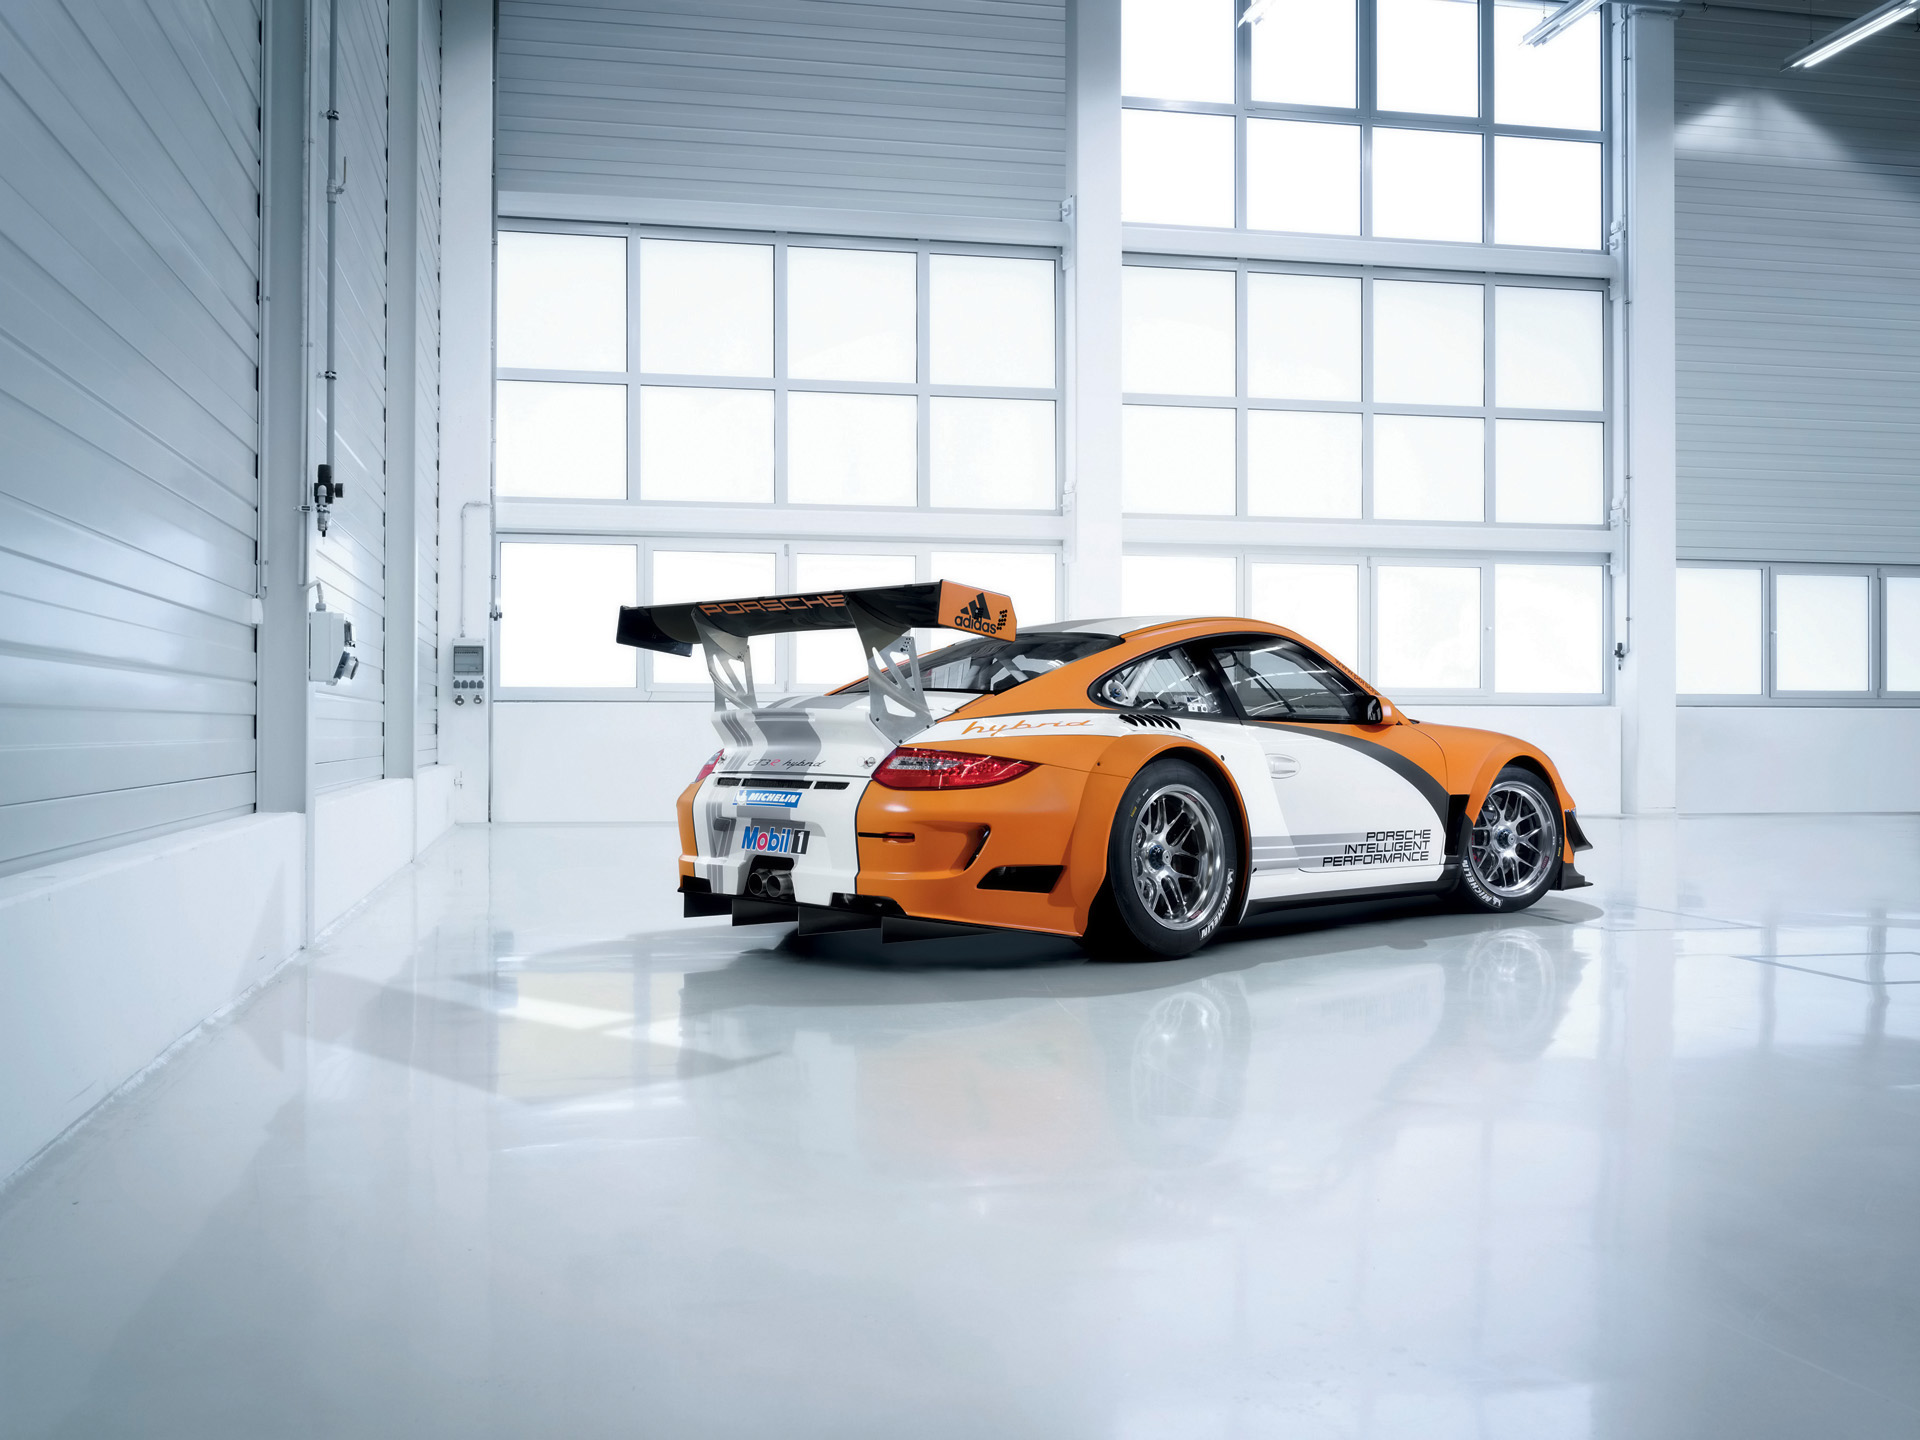  2010 Porsche 911 GT3-R Hybrid Wallpaper.